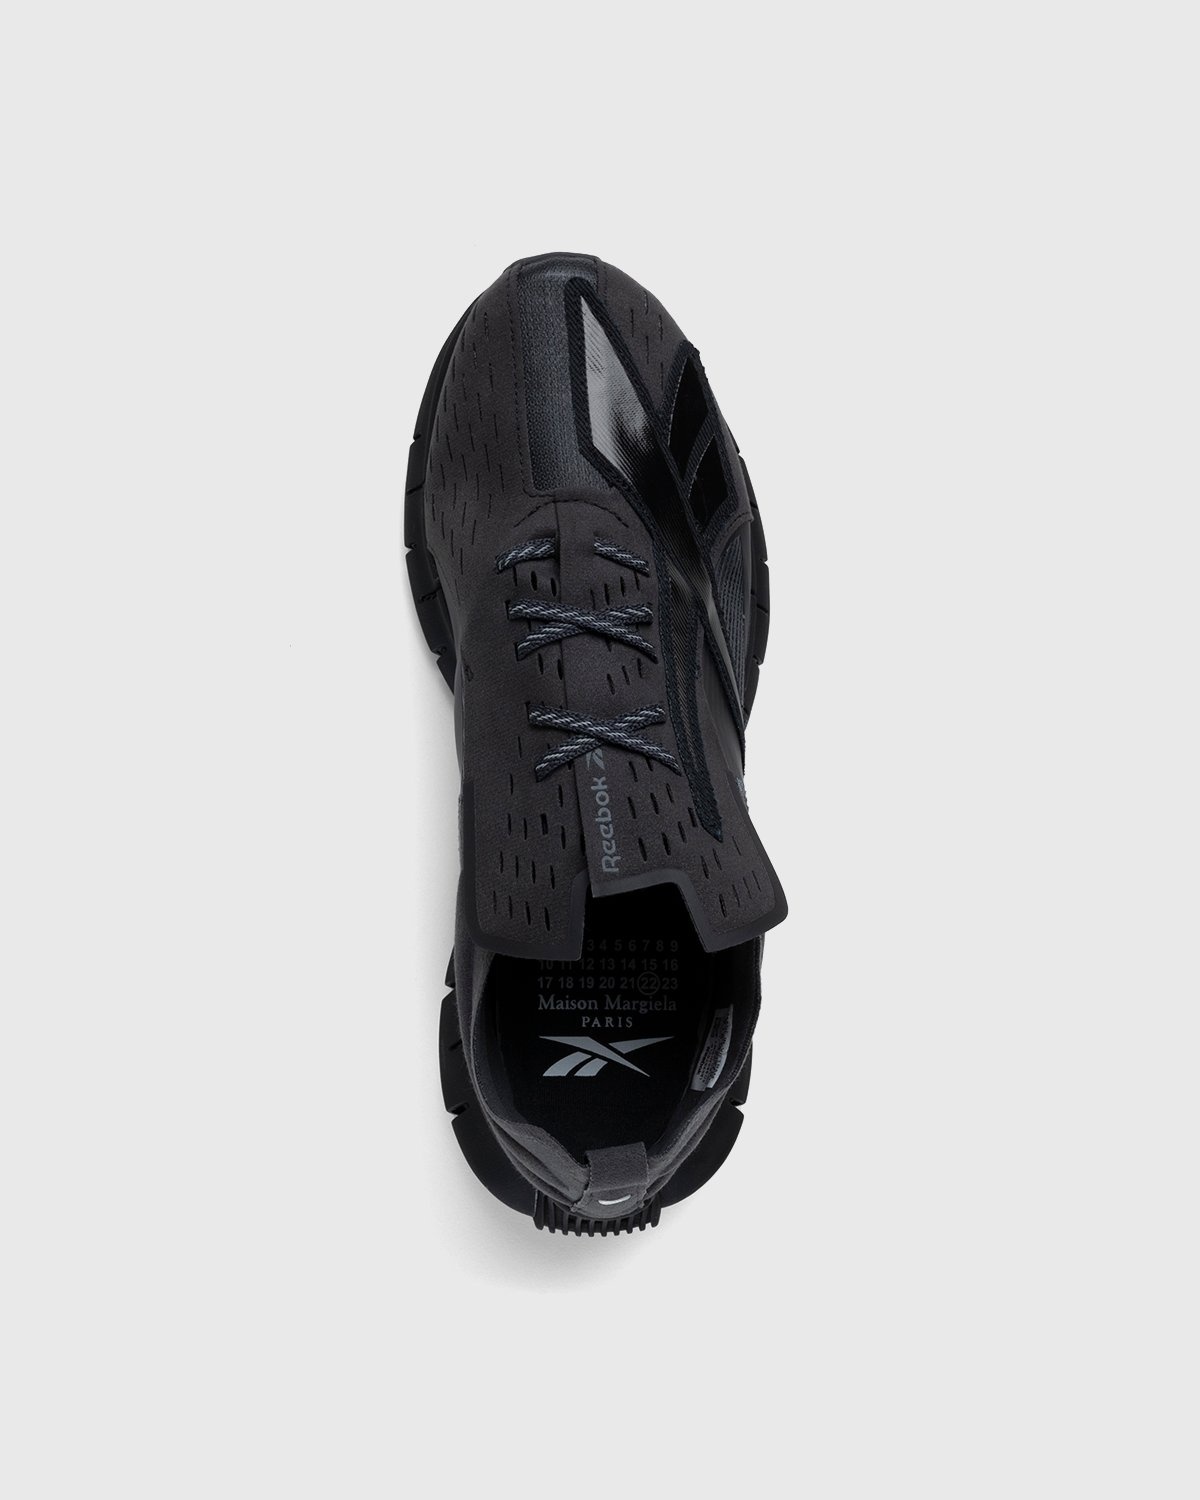 Reebok x Maison Margiela – Zig 3D Storm Memory Of Black - Sneakers - Black - Image 5